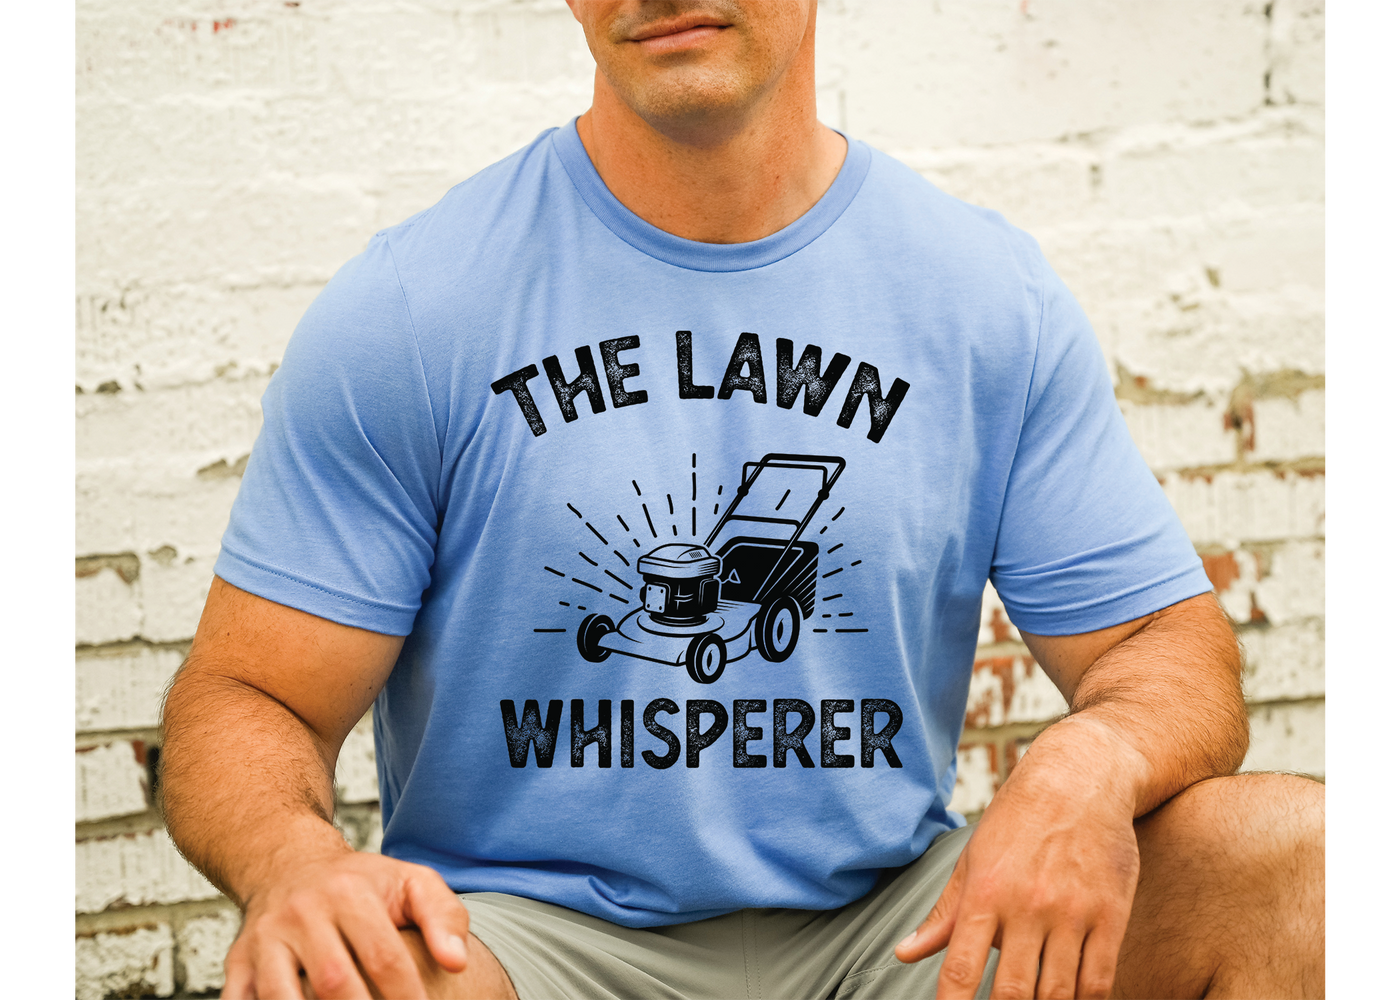 The lawn whisperer